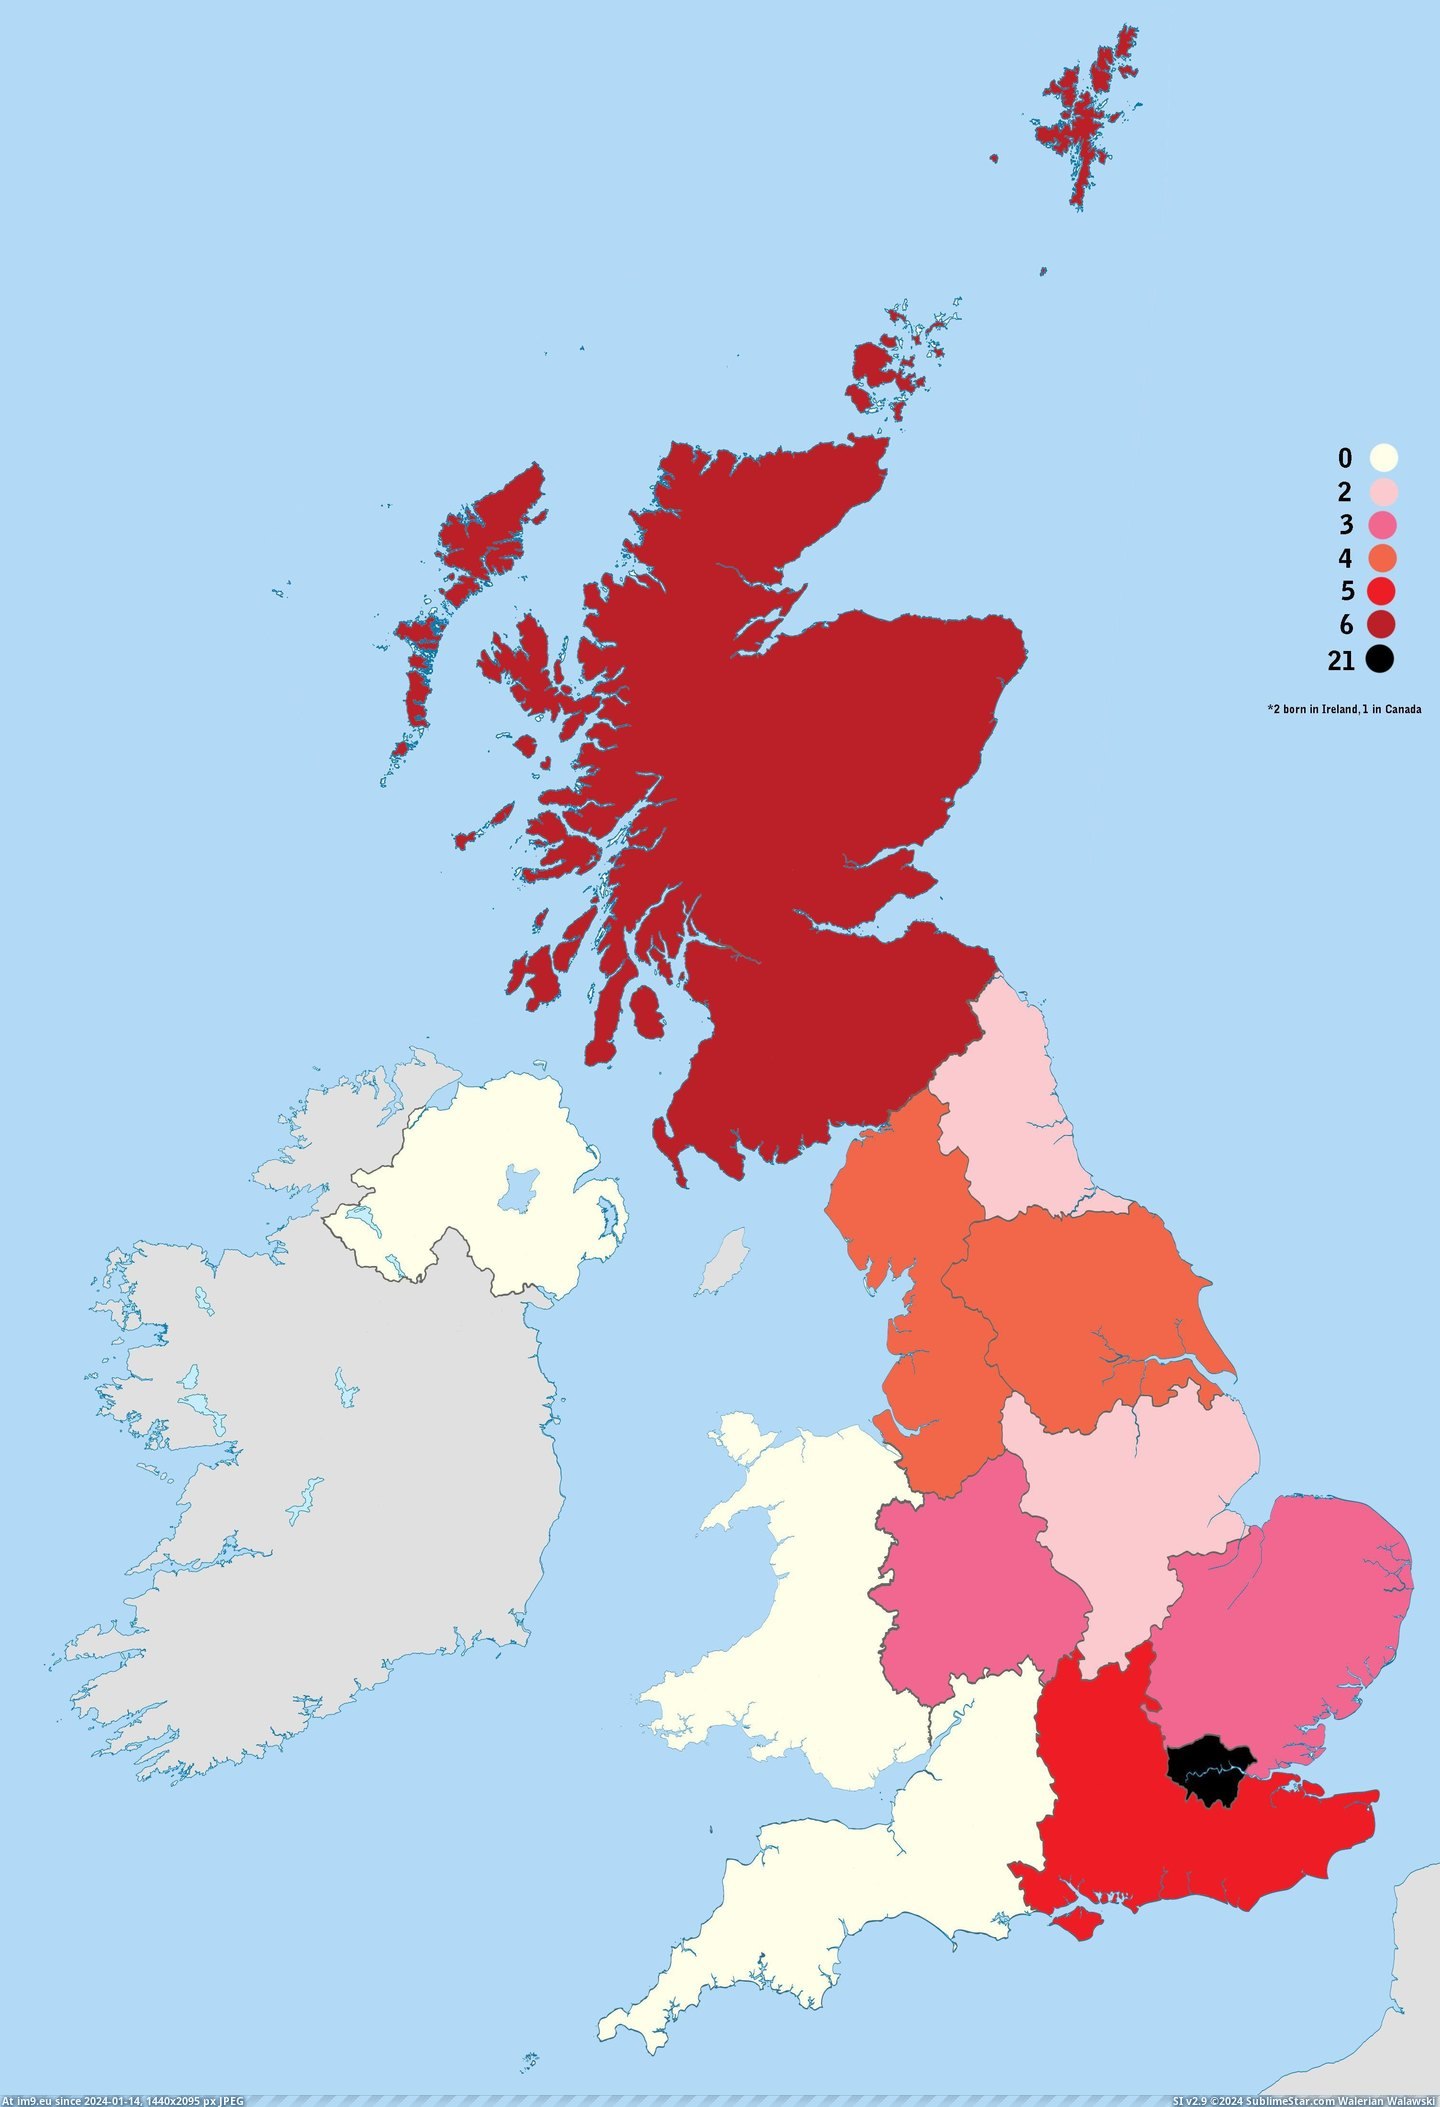 #British #Number #Regions #Ministers #Born #Prime [Mapporn] UK regions by number of British Prime Ministers born in each [3011x4392] [OC] Pic. (Bild von album My r/MAPS favs))